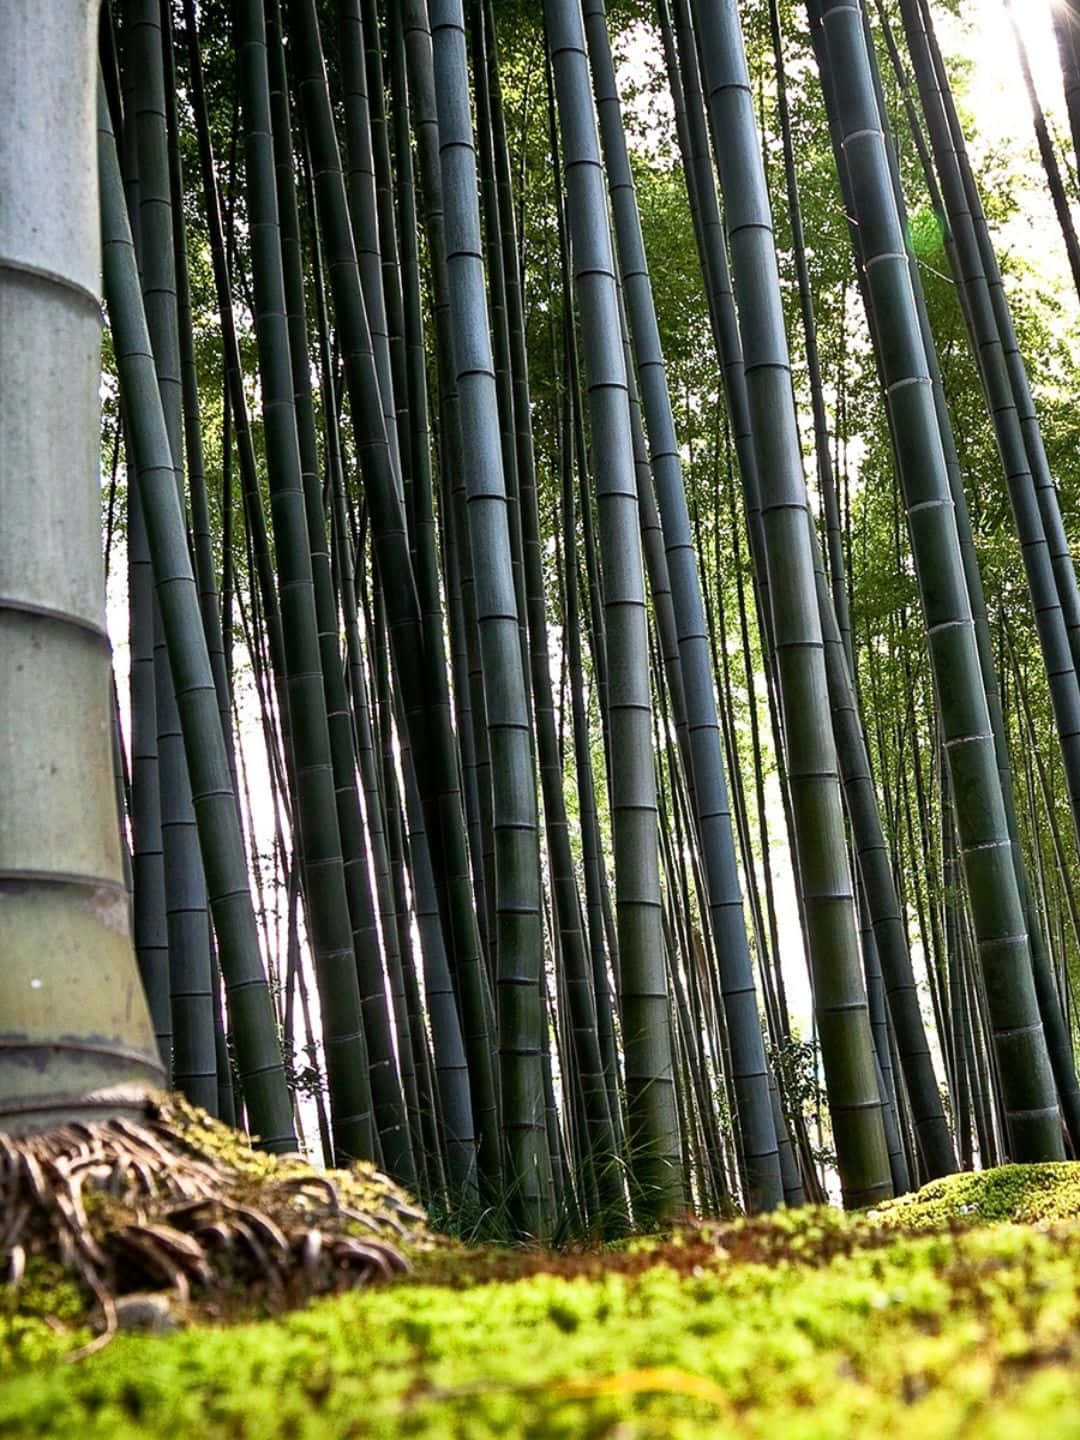 Fondode Pantalla De Bambú En Toma Desde El Suelo - 1440p